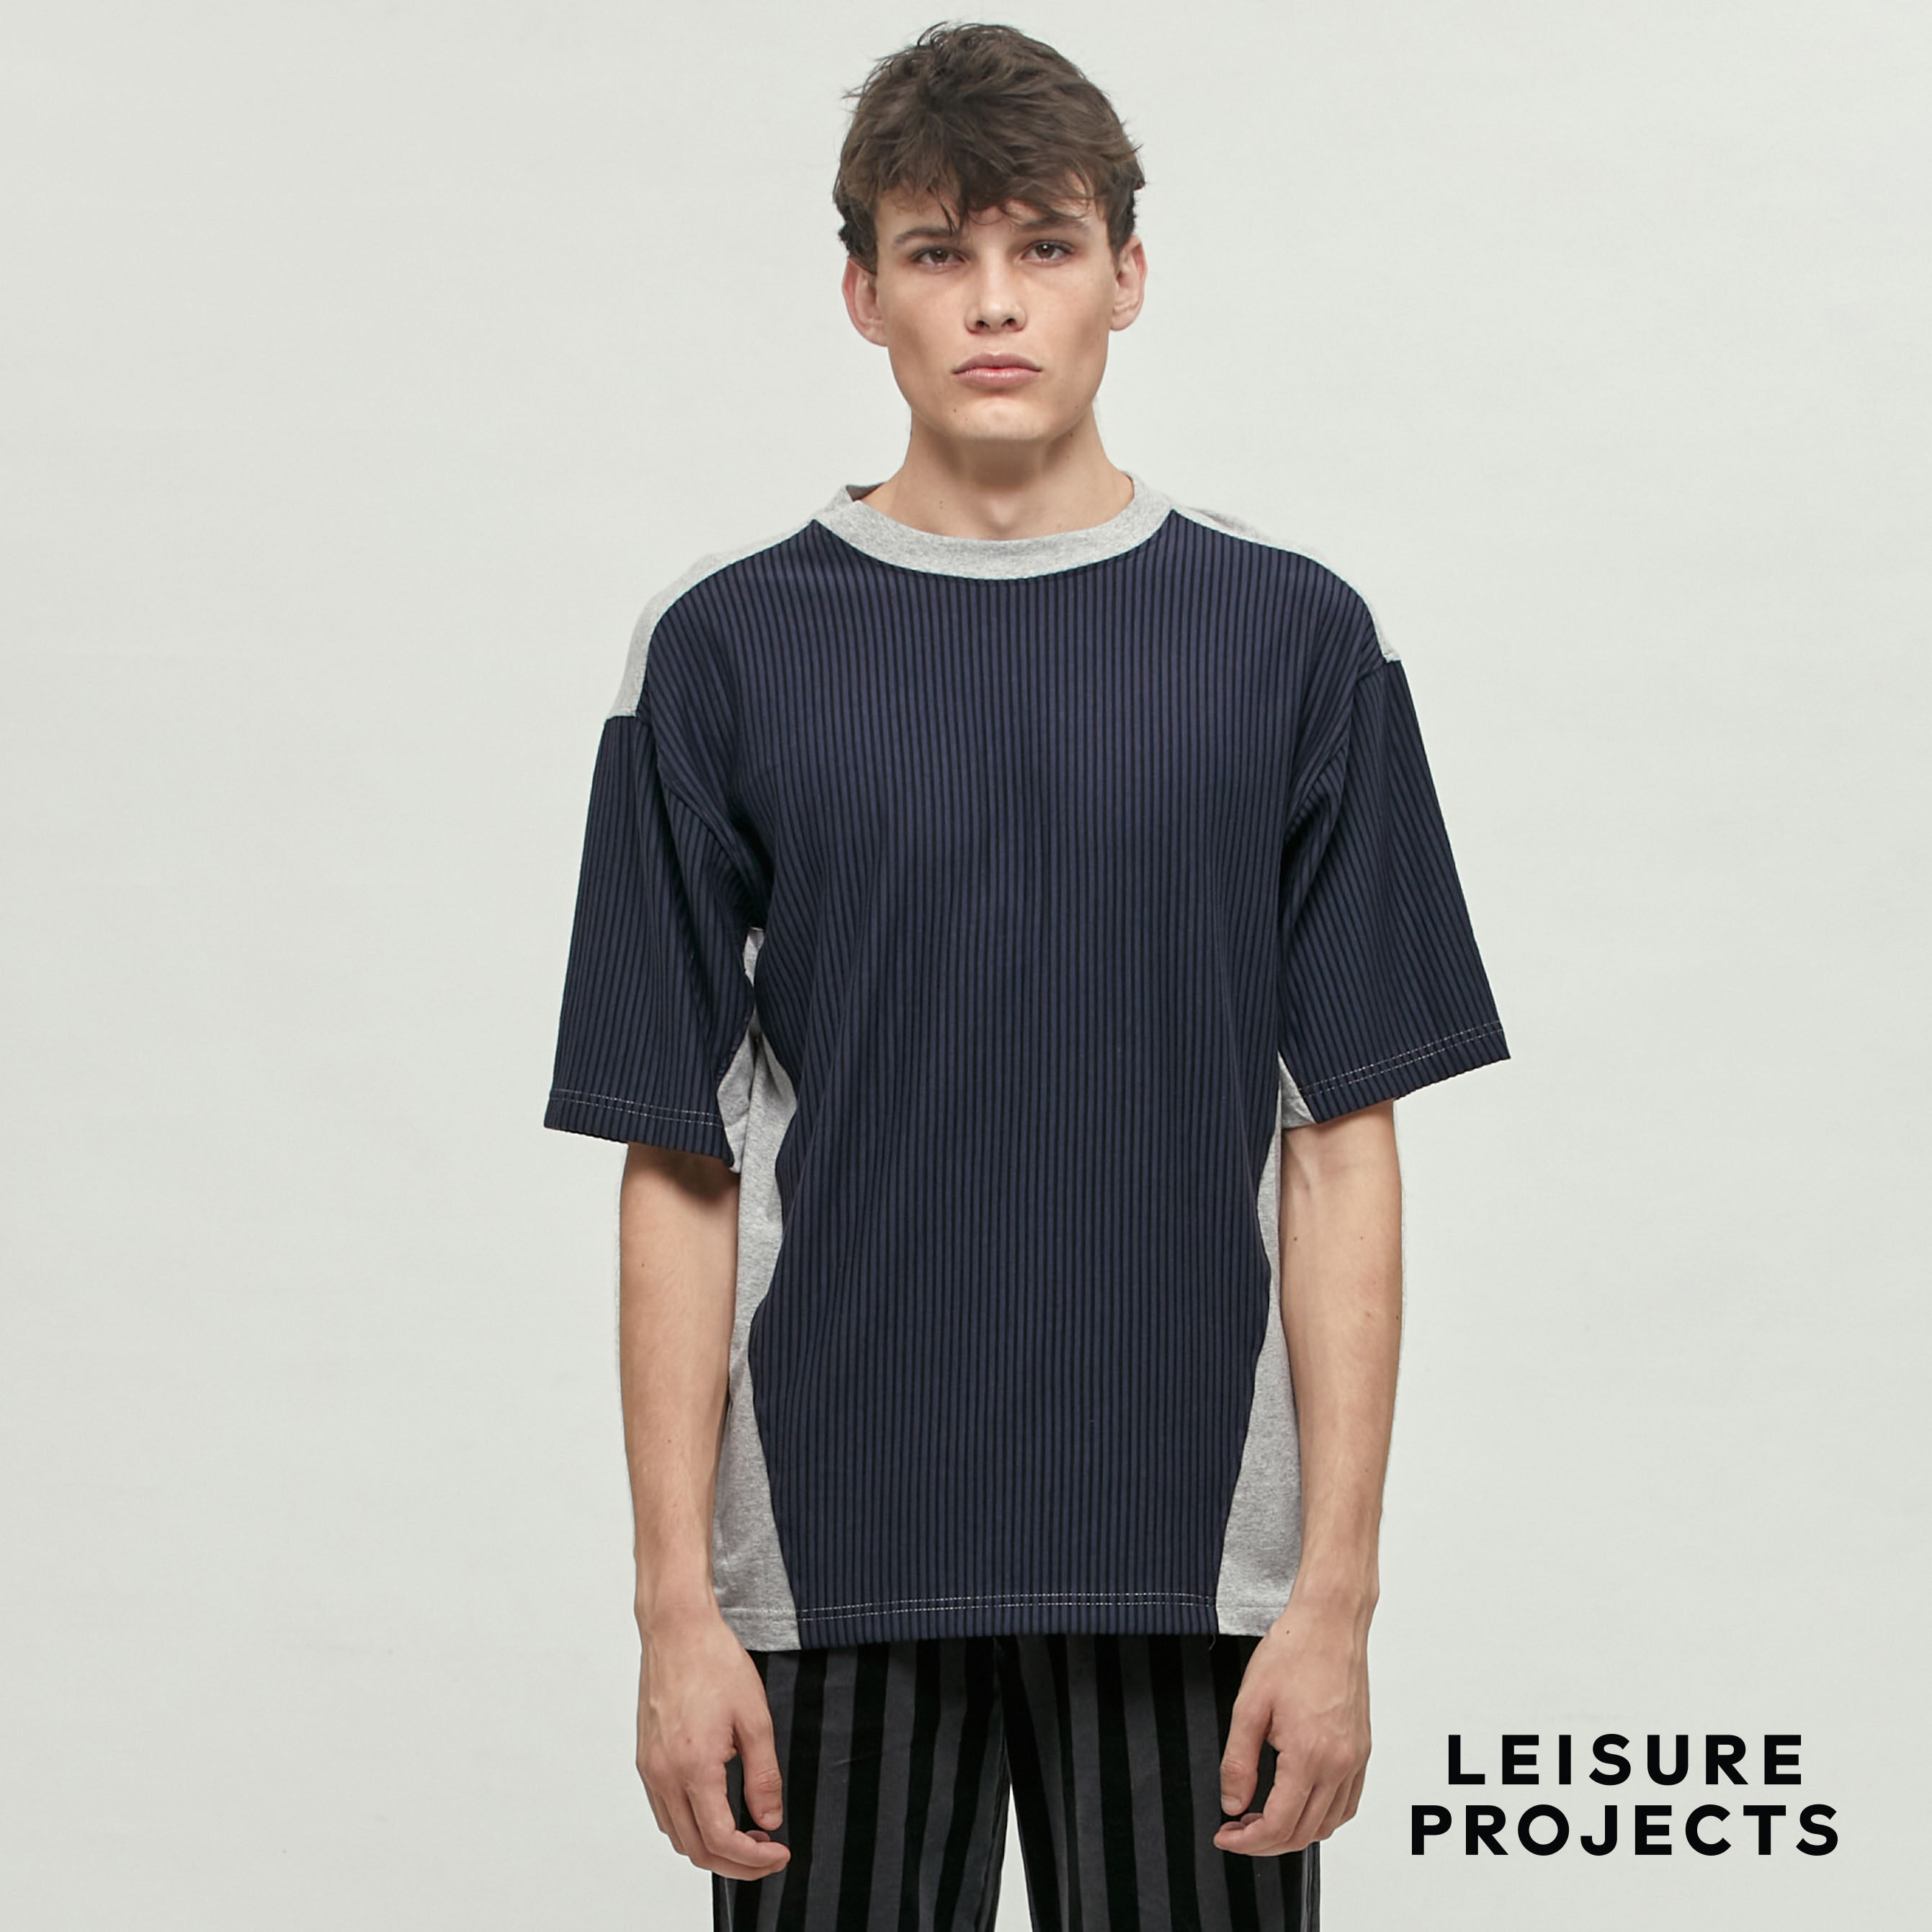 (LEISURE PROJECTS) PANEL T-SHIRT เสื้อยืด คอกลม ทรง oversize LEISURE PROJECTS ดีเทลตัดต่อผ้าลายทางด้านหน้า